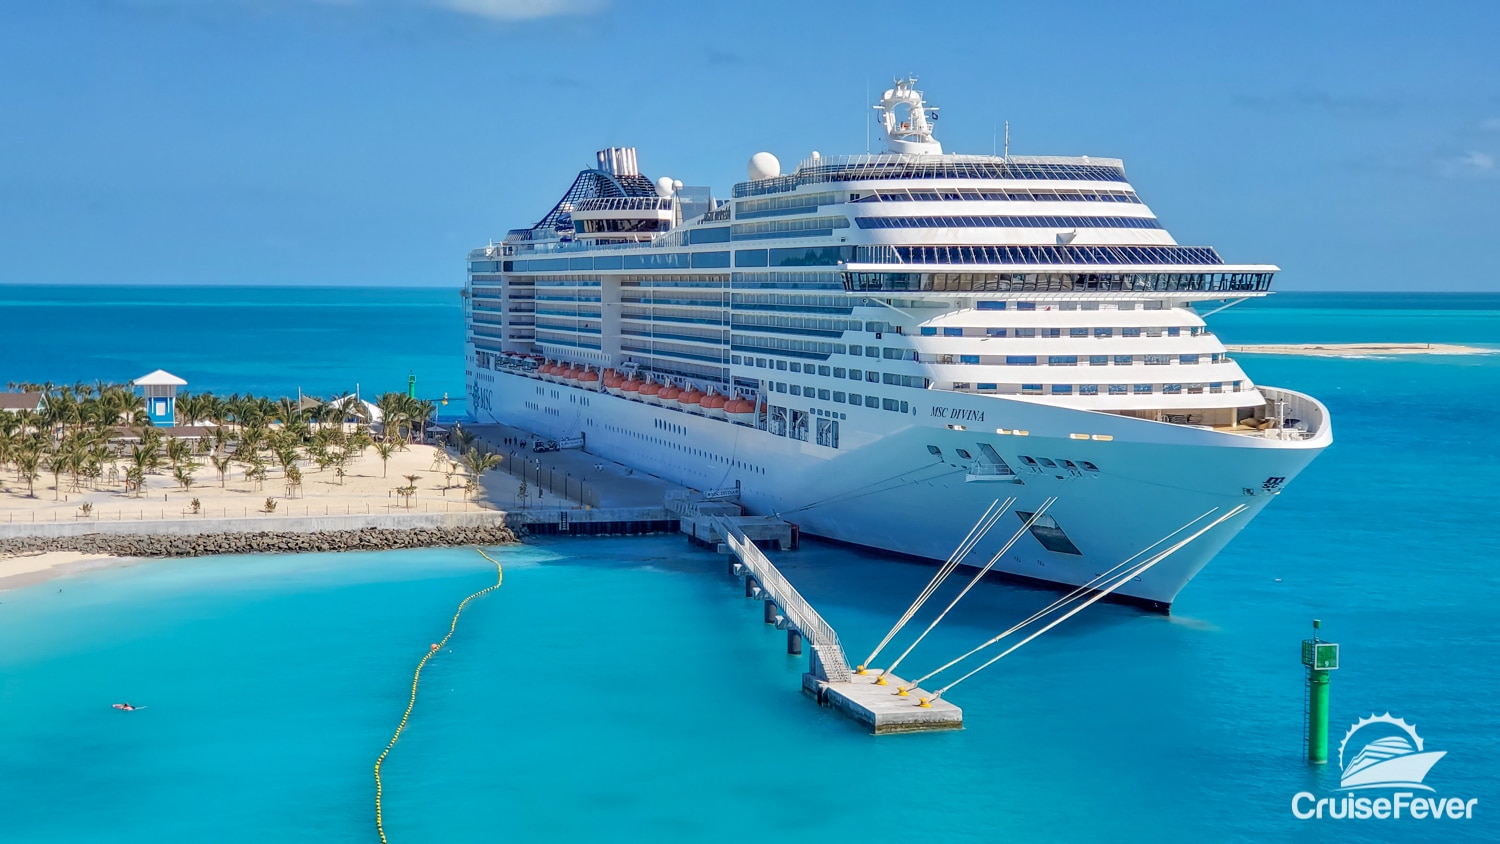 MSC Divina cruise ship docked at Ocean Cay in the Bahamas